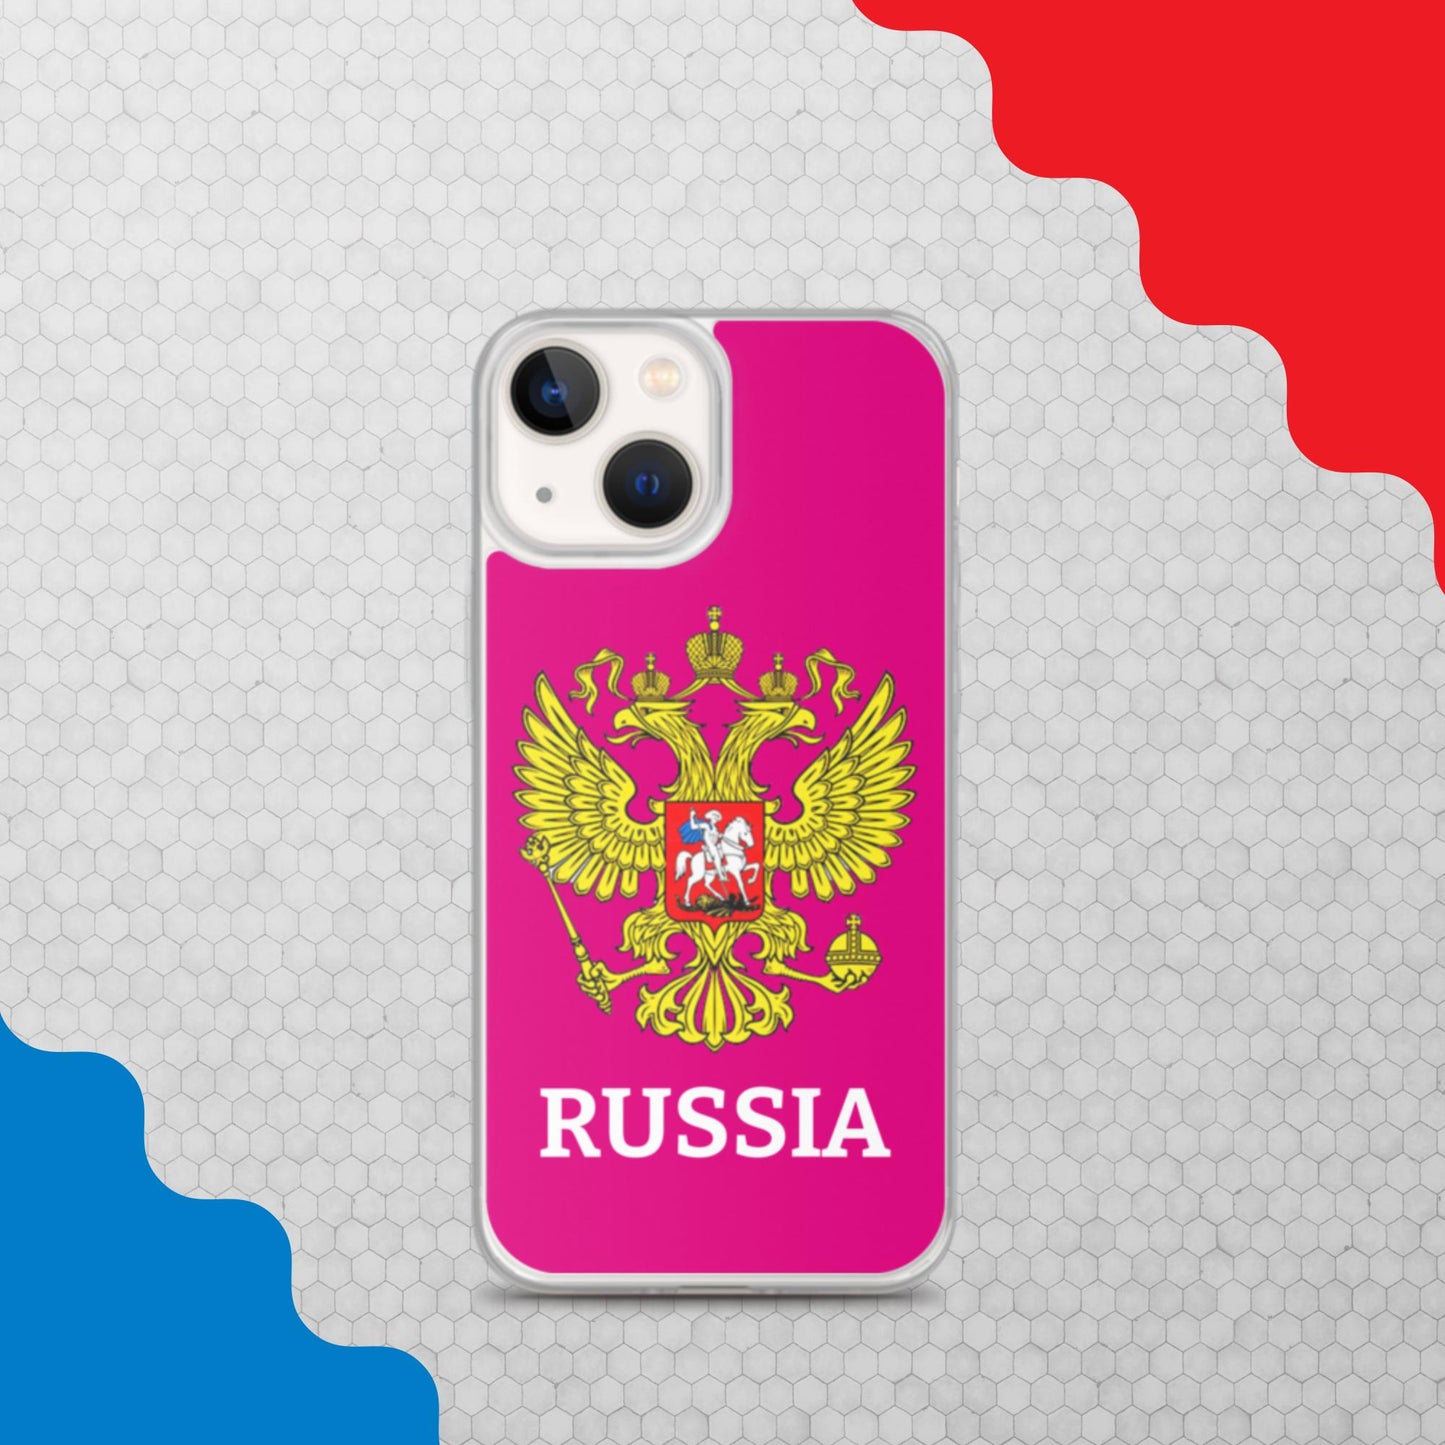 iPhone-Hülle mit Russland-Wappen in lila (alle Modelle)